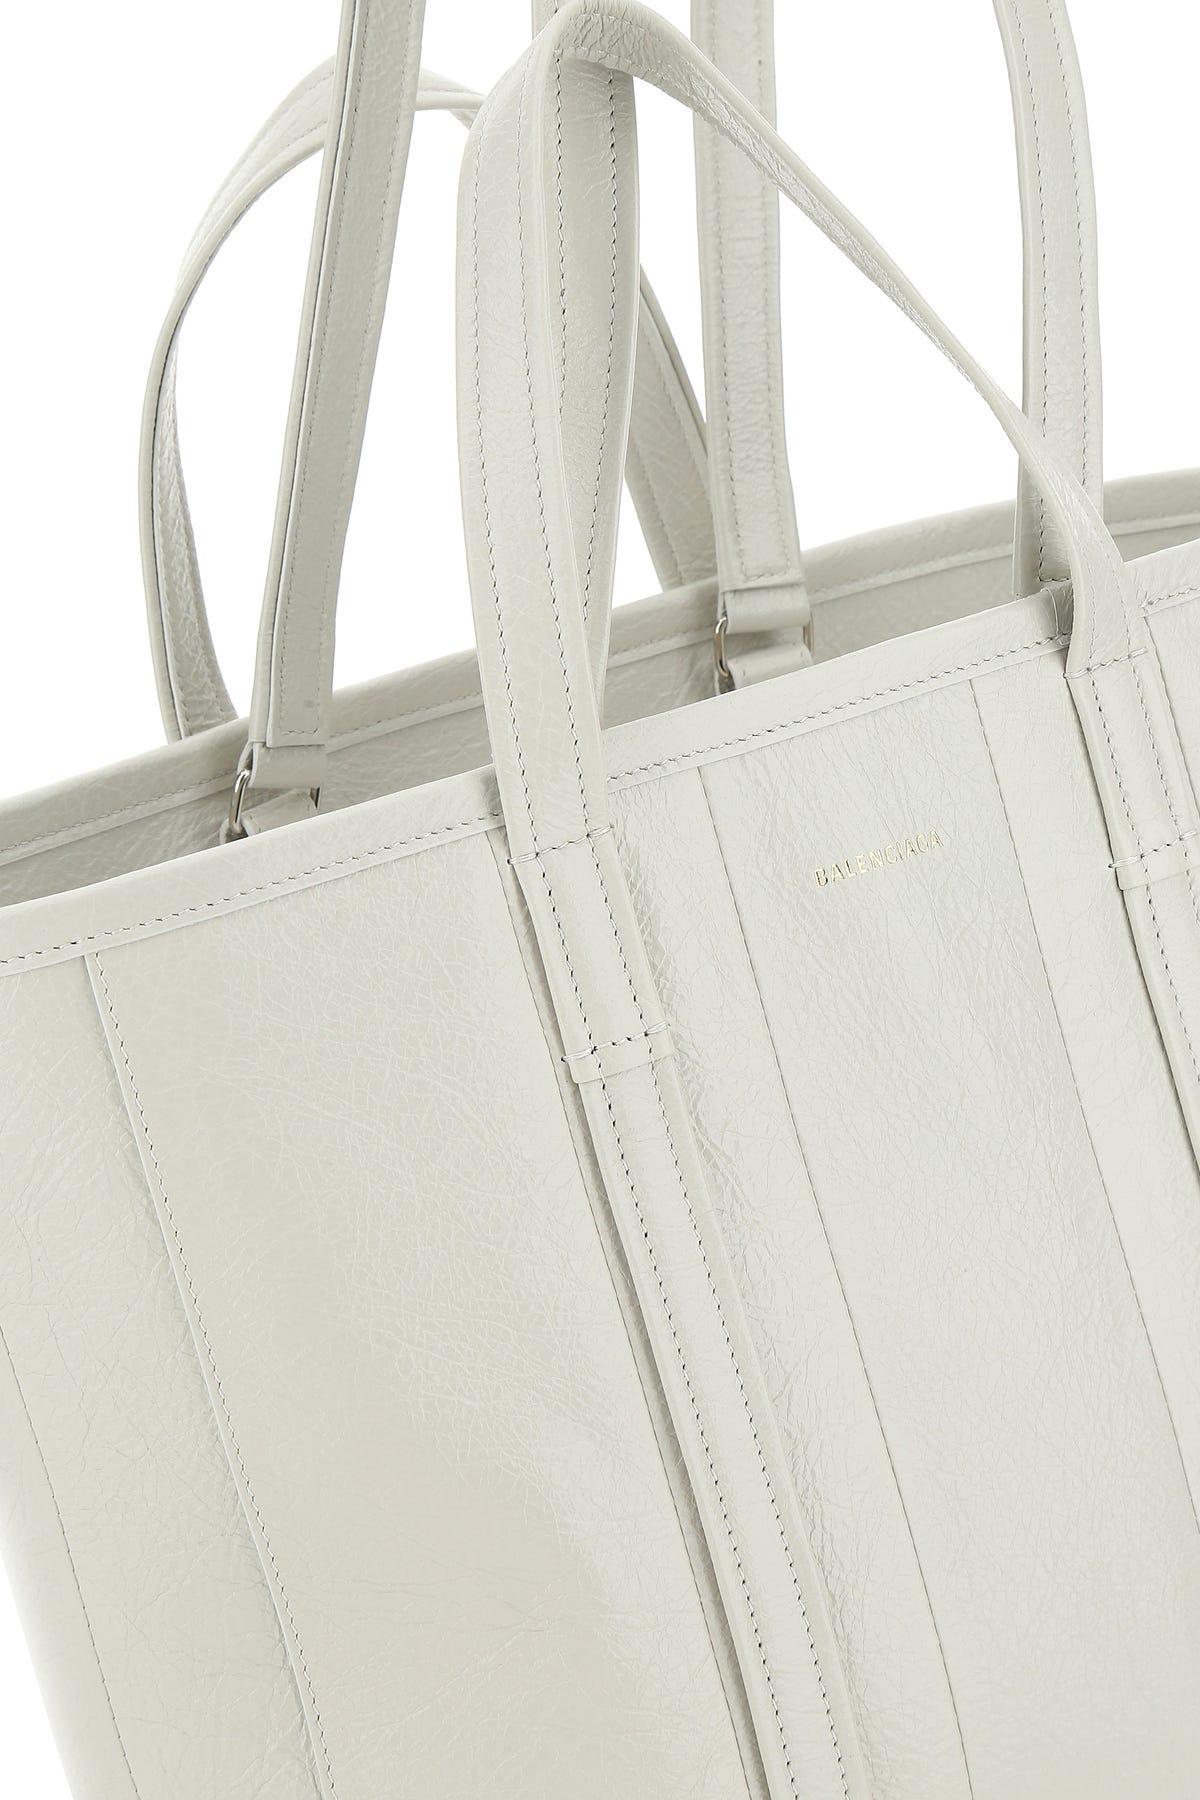 Balenciaga Chalk Leather Medium Barbes Shopping Bag in White - Lyst